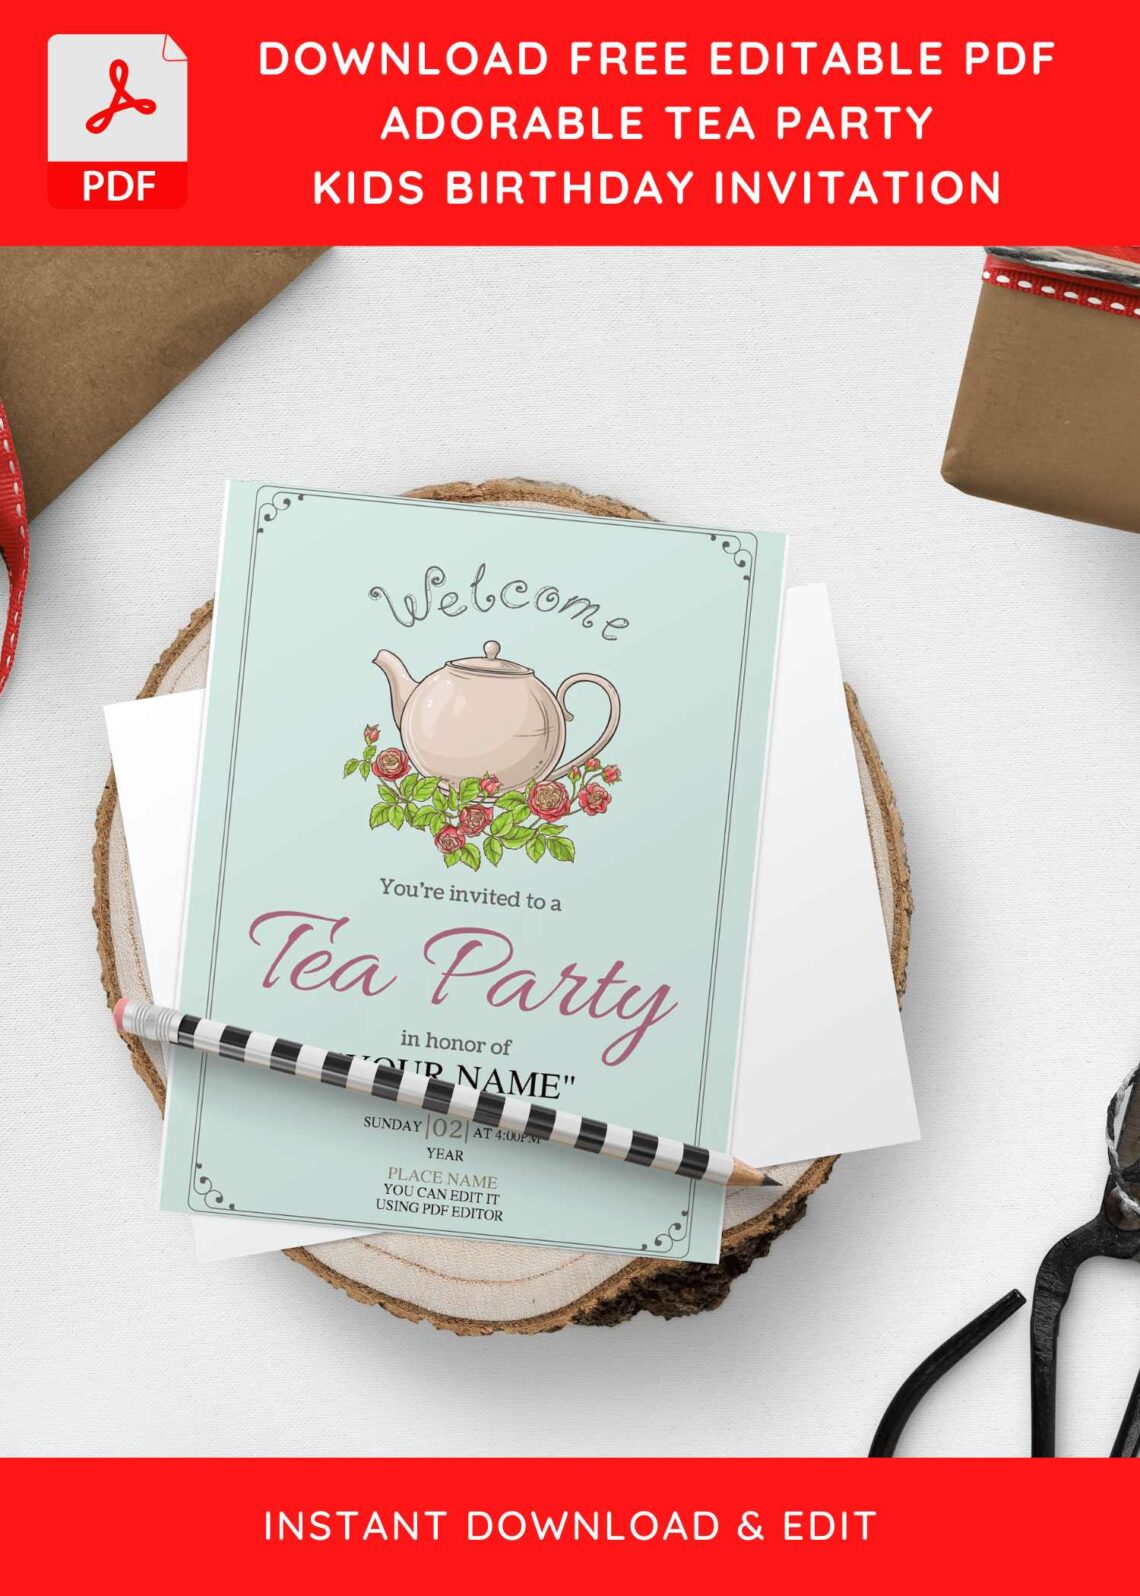 (Free Editable PDF) Adorable Tea Party Birthday Invitation Templates H